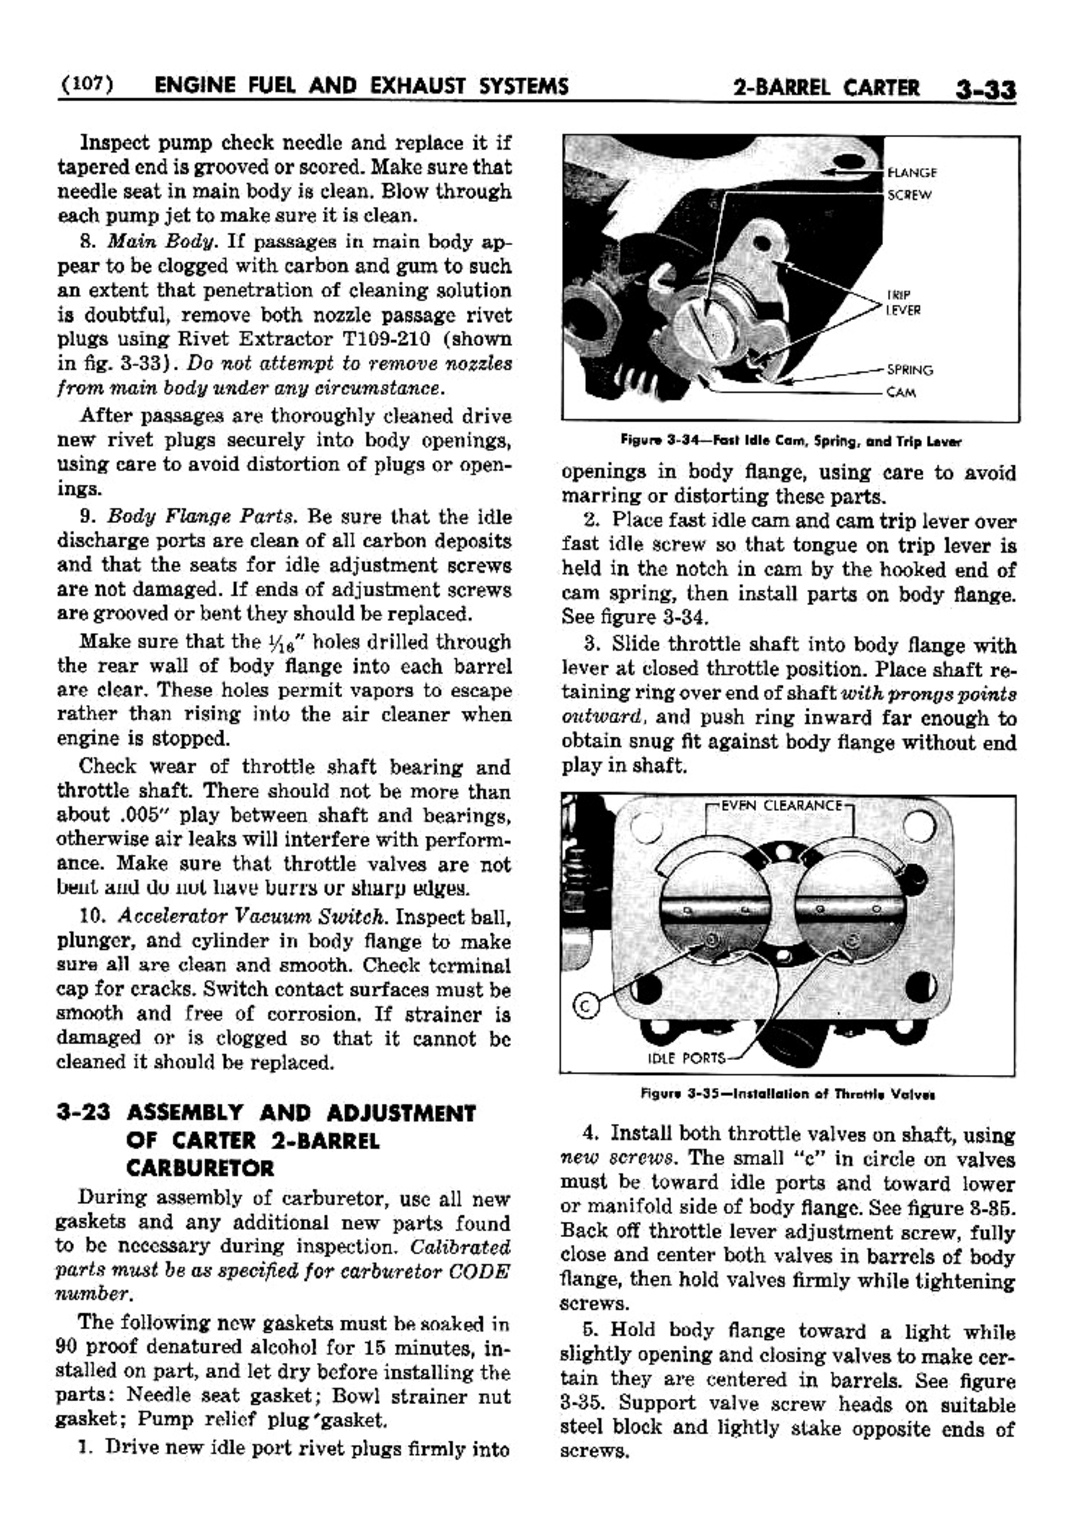 n_04 1952 Buick Shop Manual - Engine Fuel & Exhaust-033-033.jpg